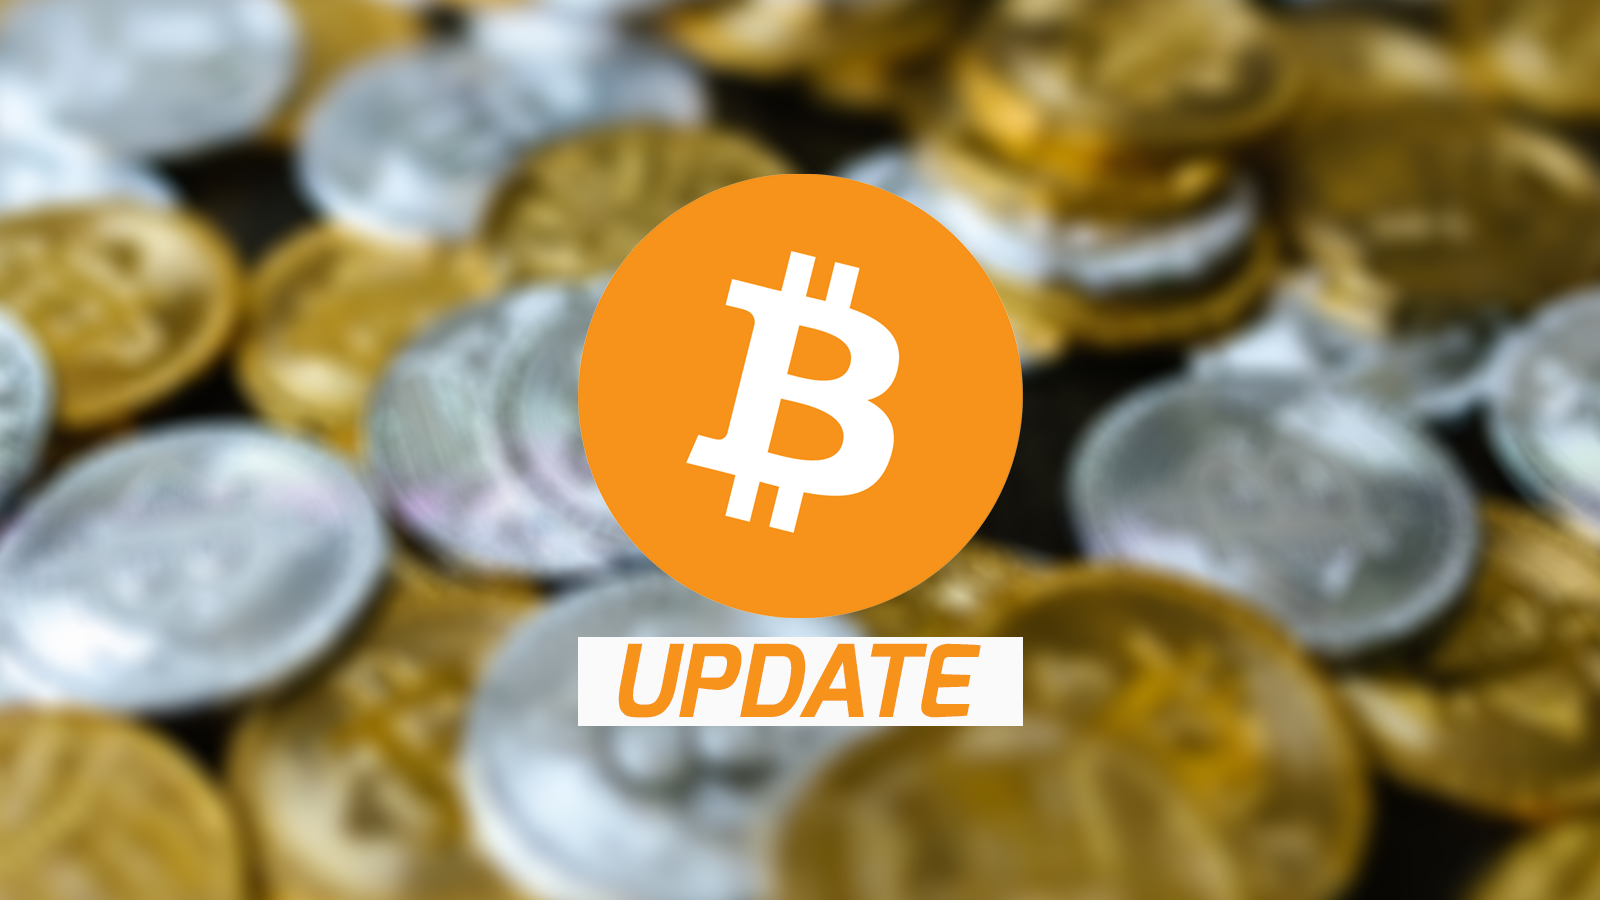 Bitcoin update price BTC flat crypto rising to worst case